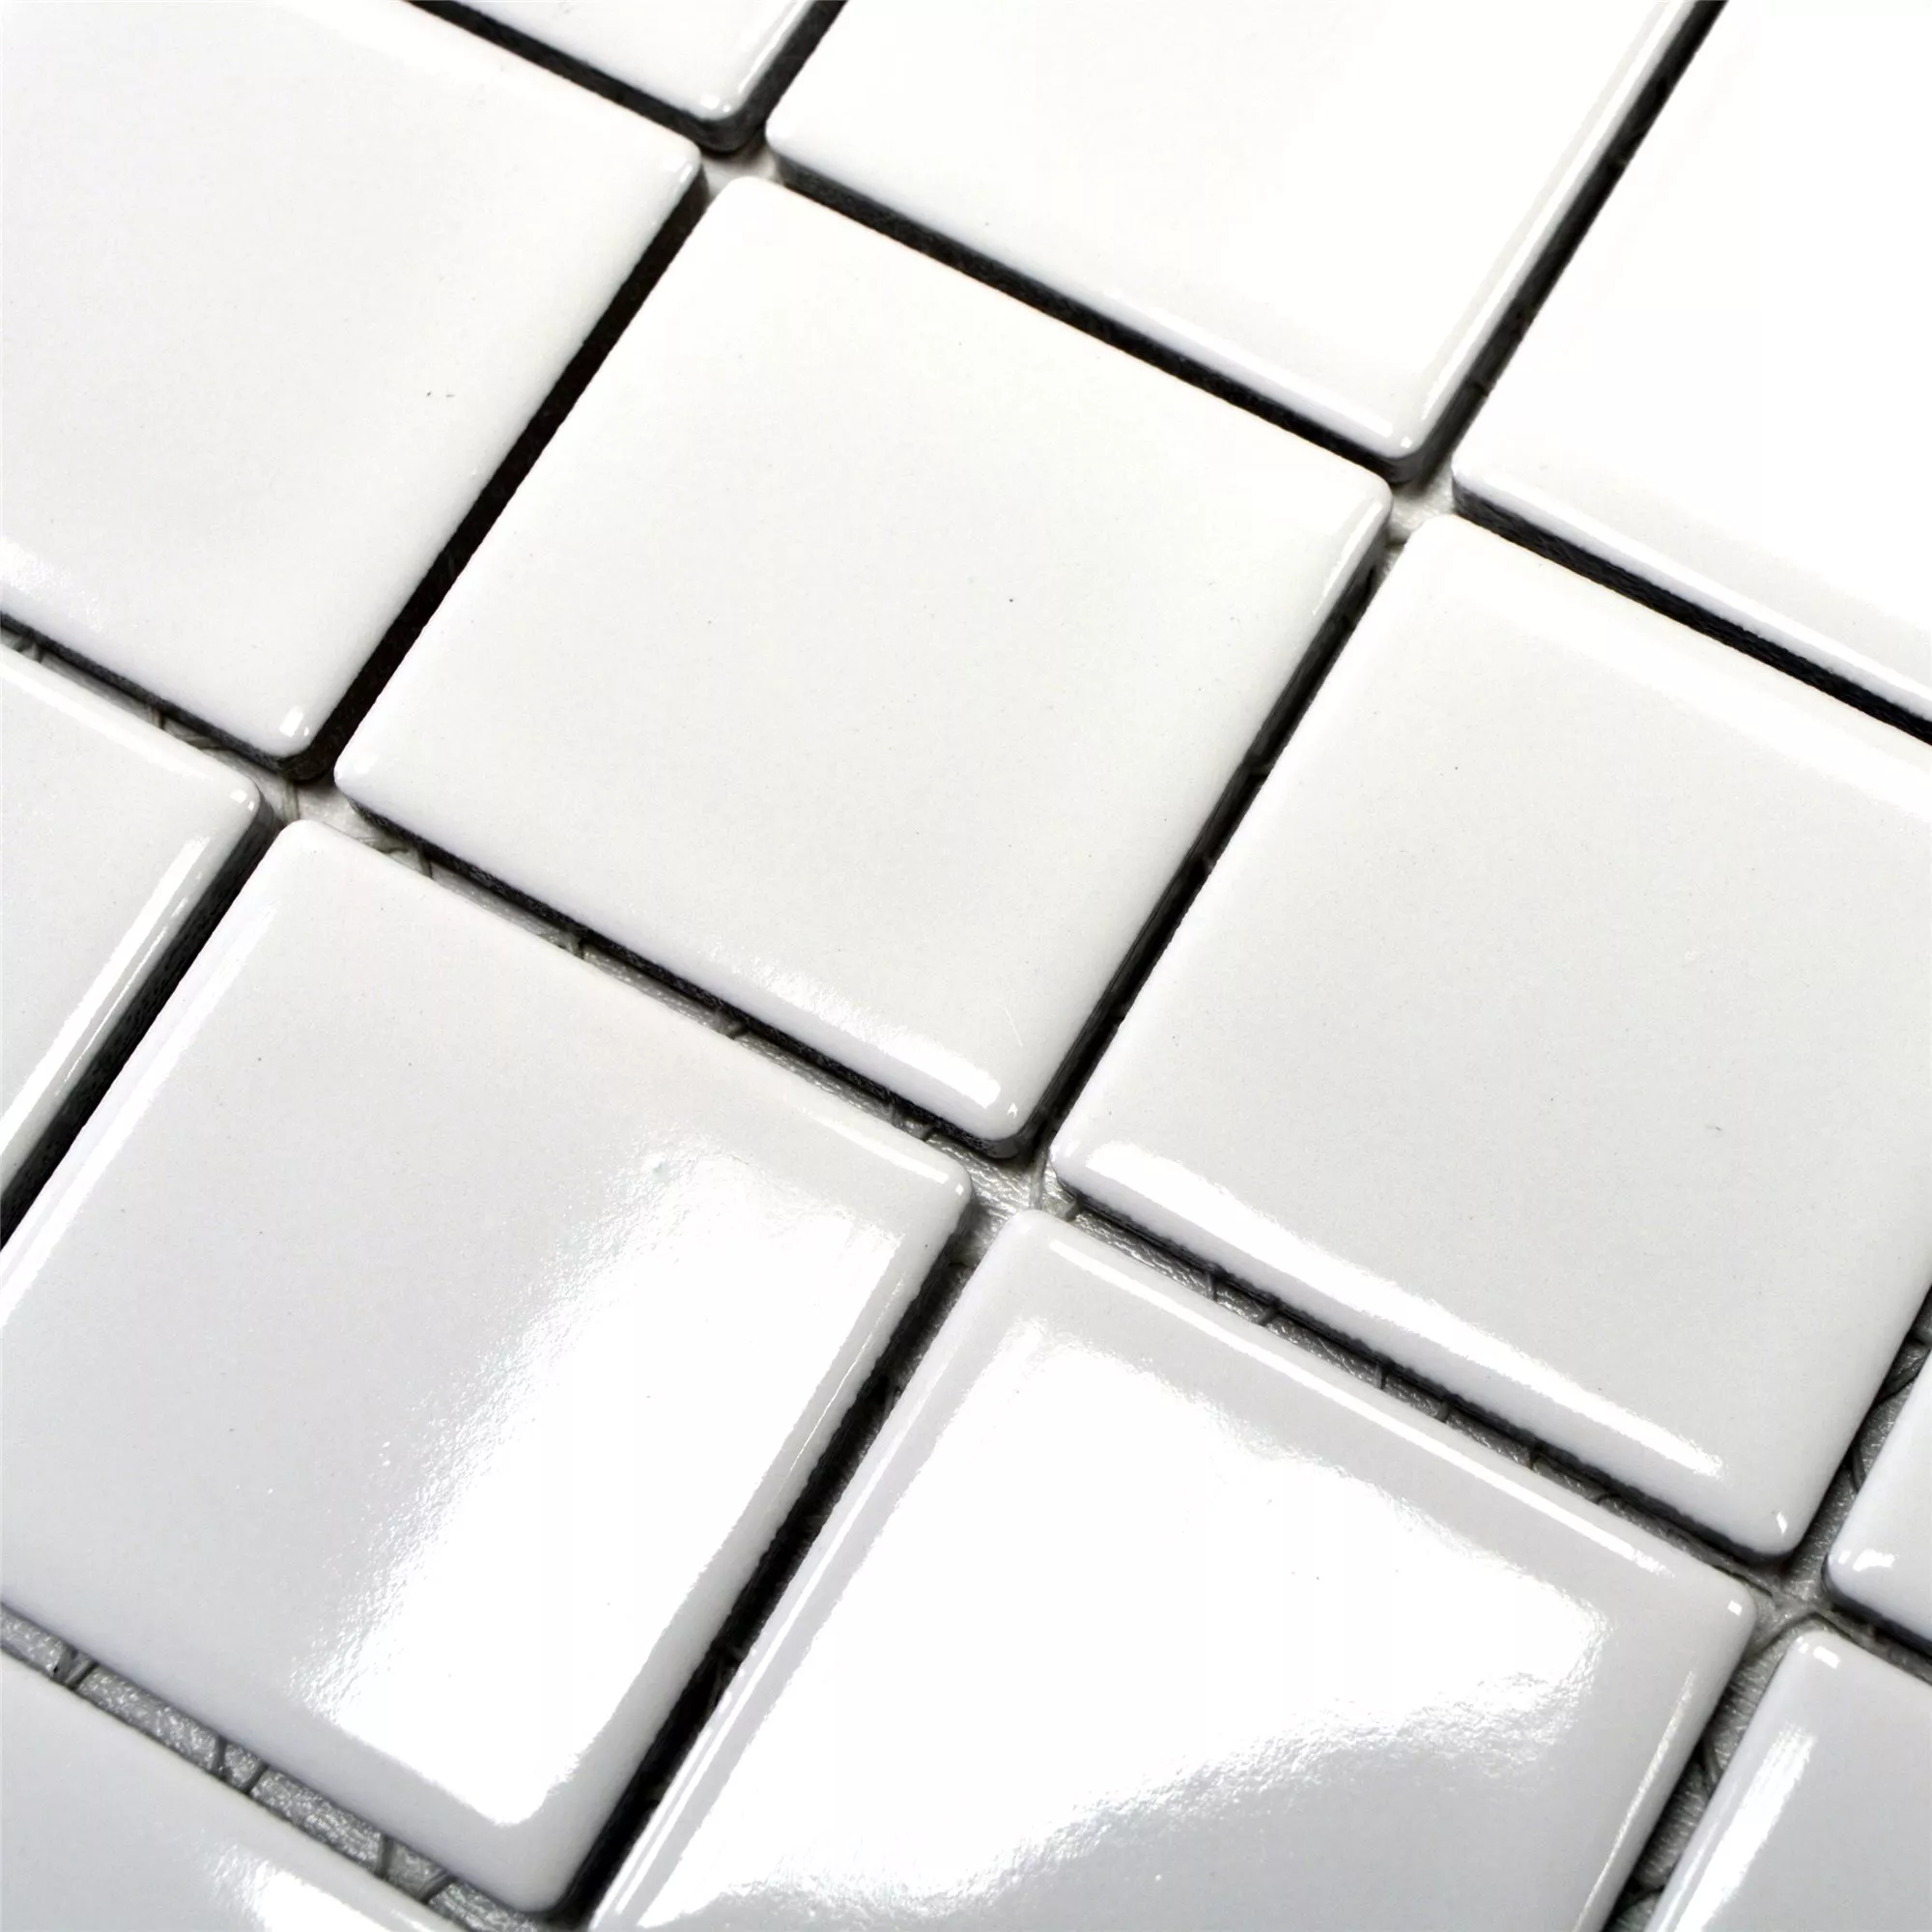 Ceramic Mosaic Tiles Adrian White Glossy Square 48